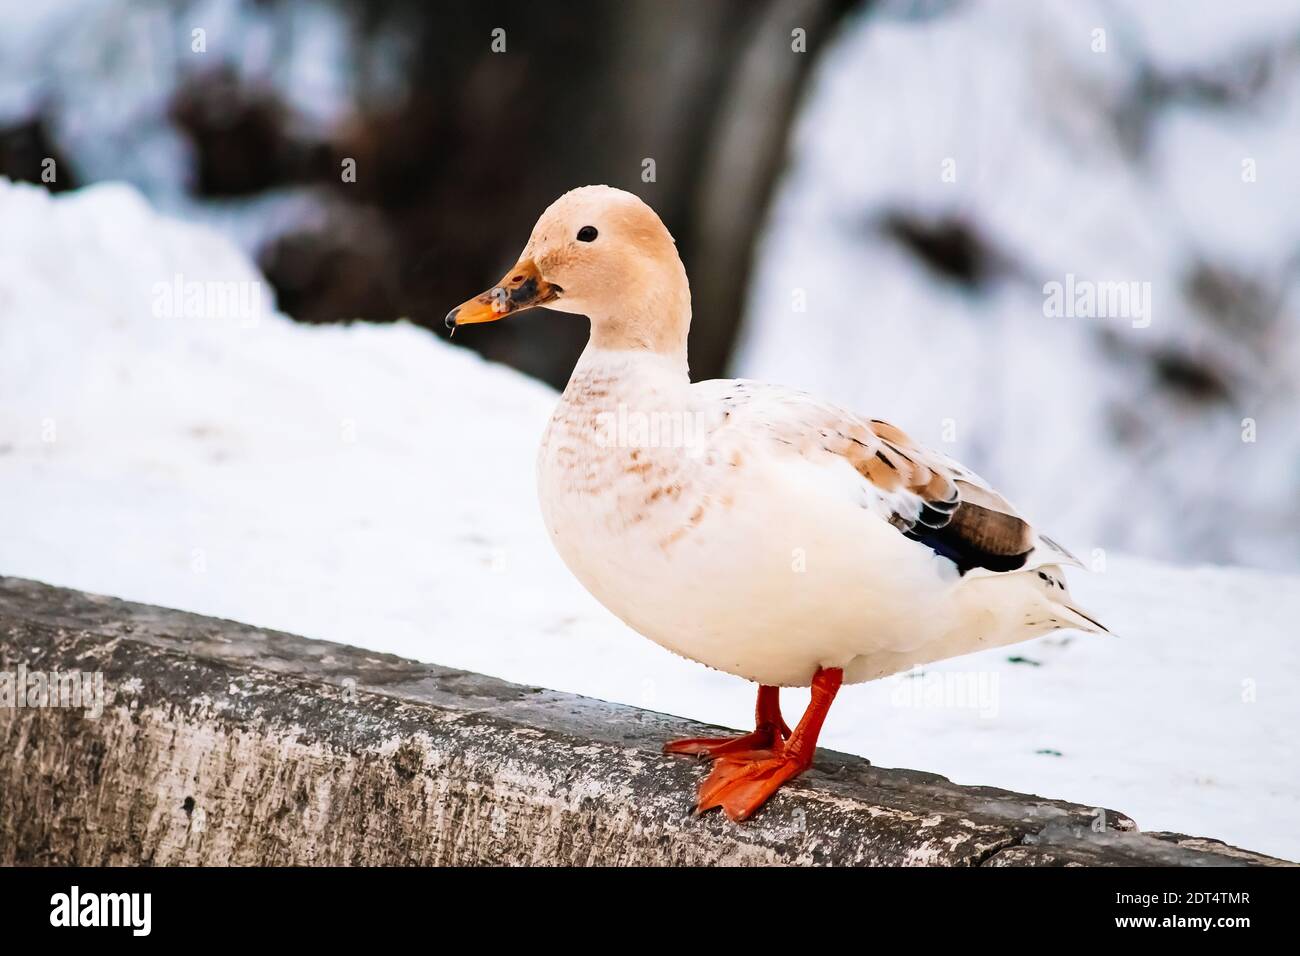 Wild brown duck in winter. Hunting for mallards. Bird watching. Stock Photo